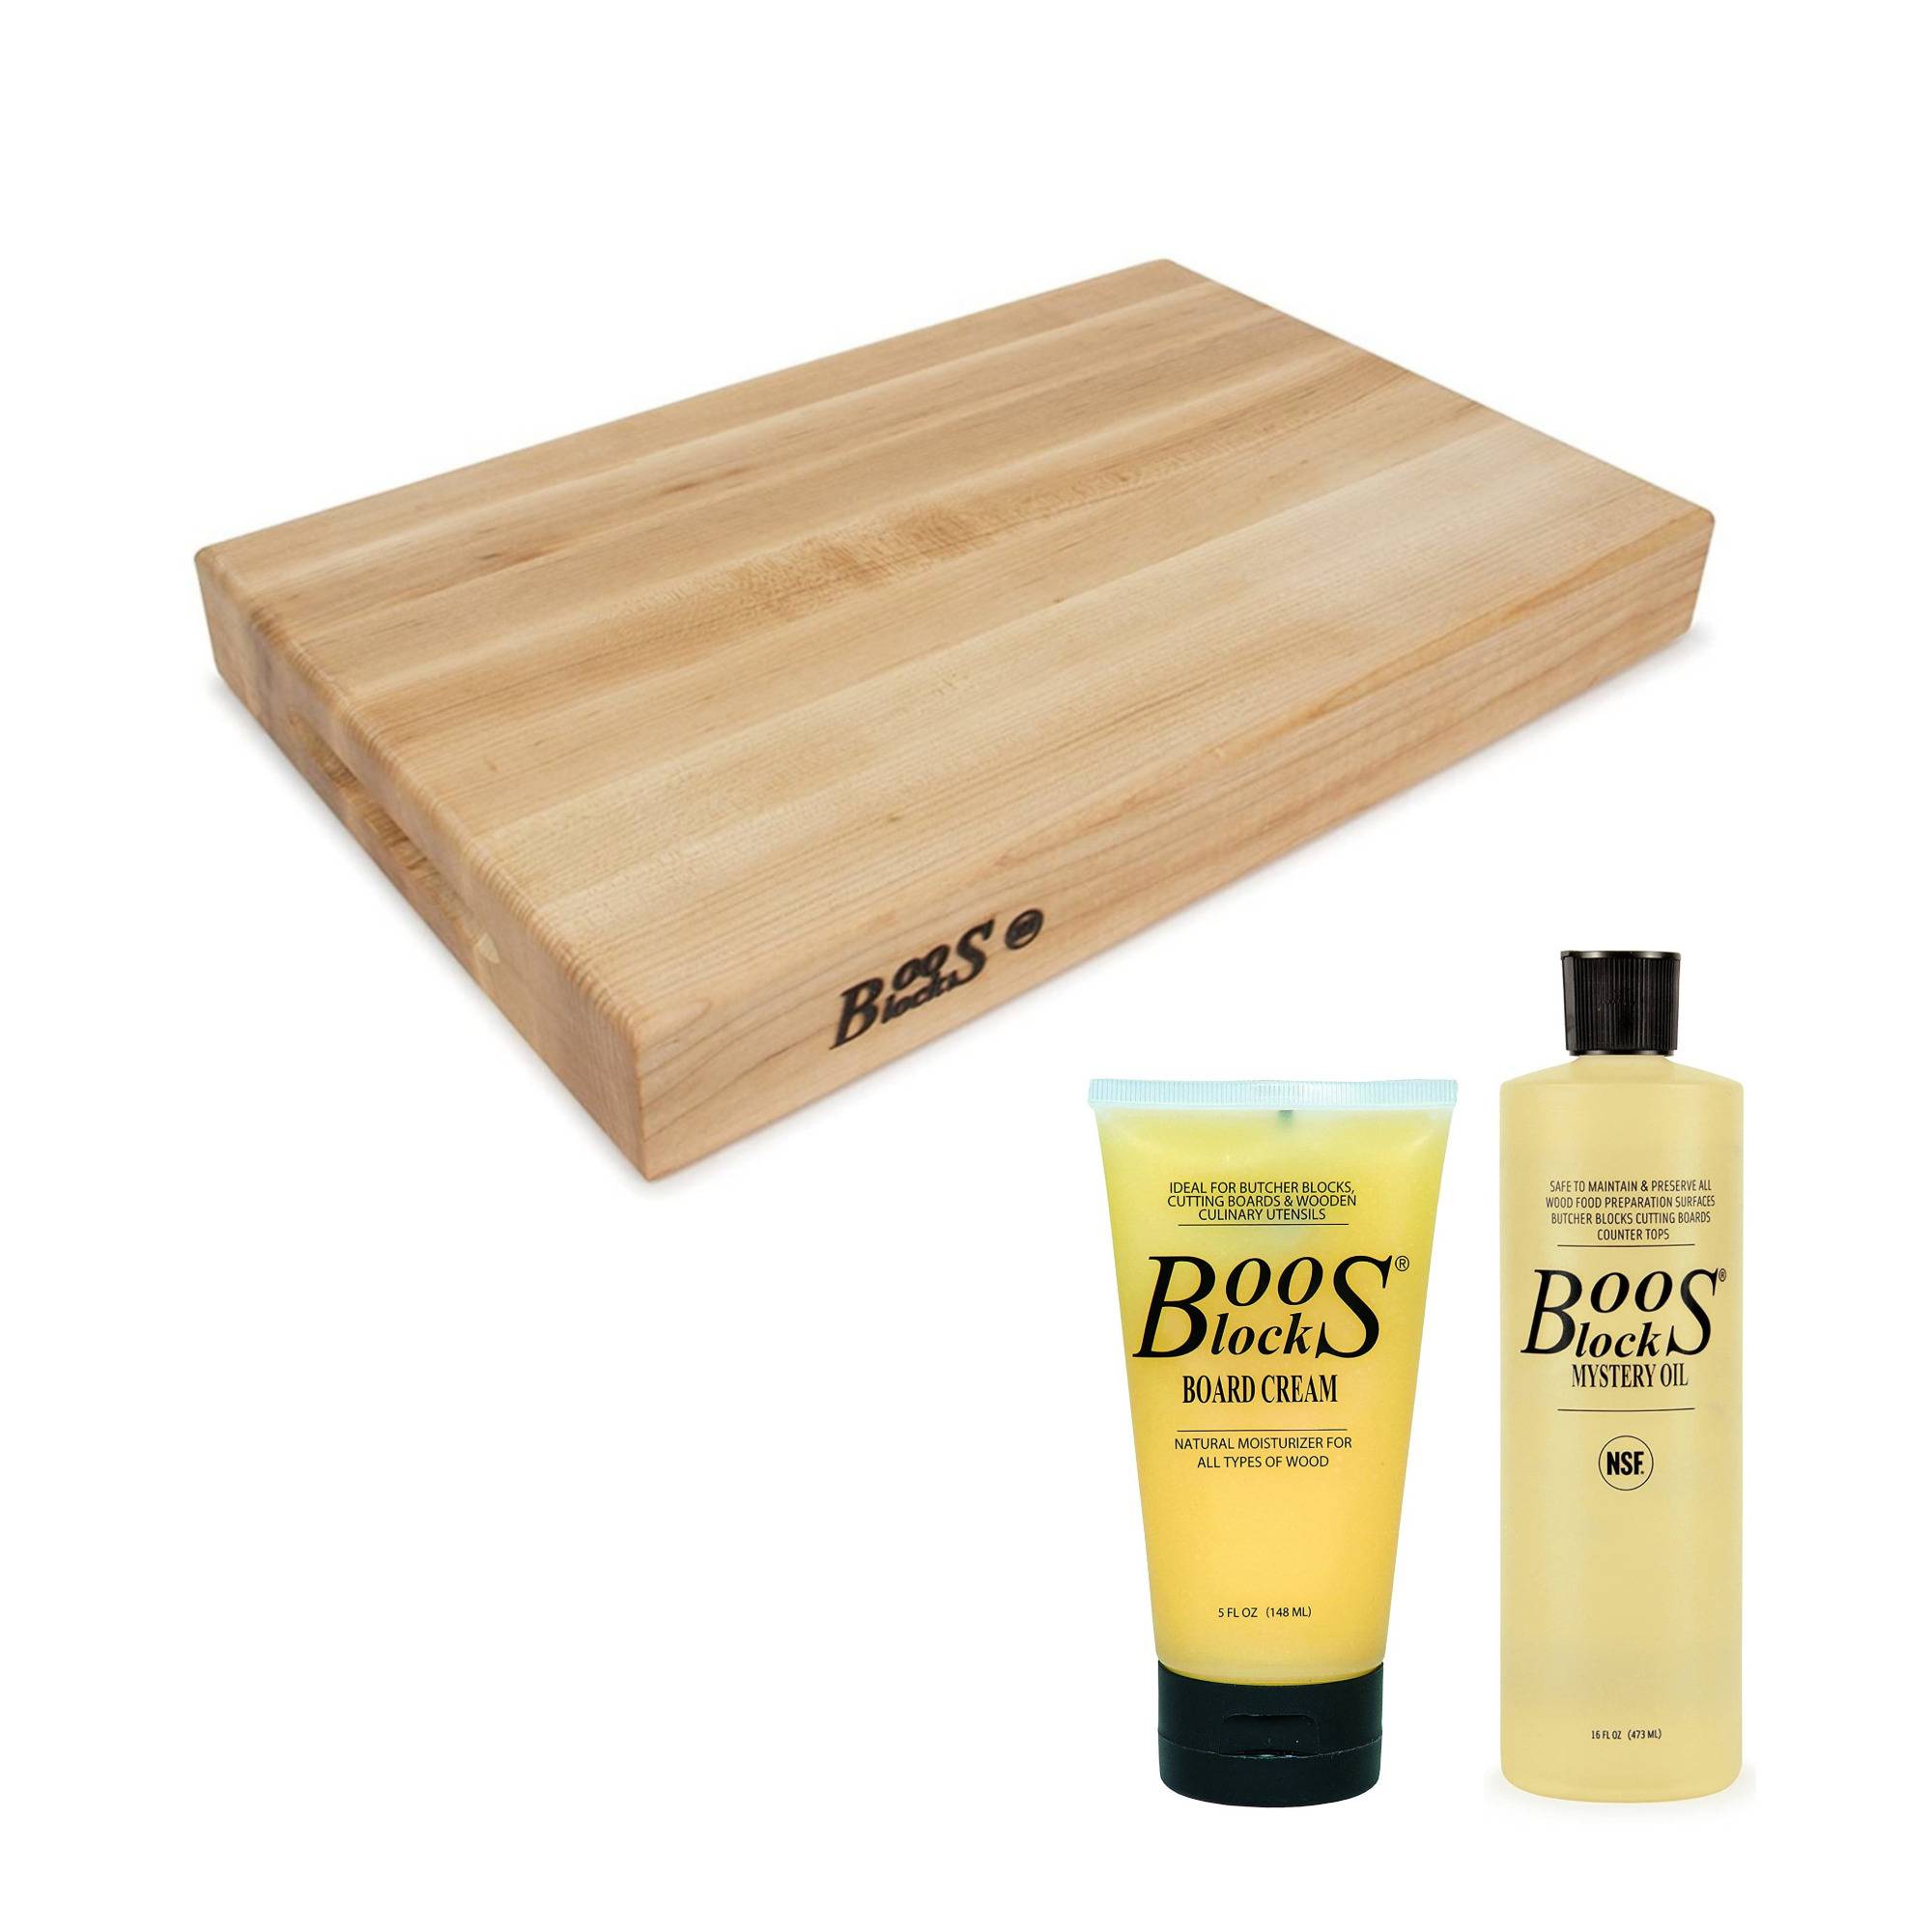 John Boos Block RA03 Maple Wood Edge Grain Reversible Cutting Board with Oil and Board Cream